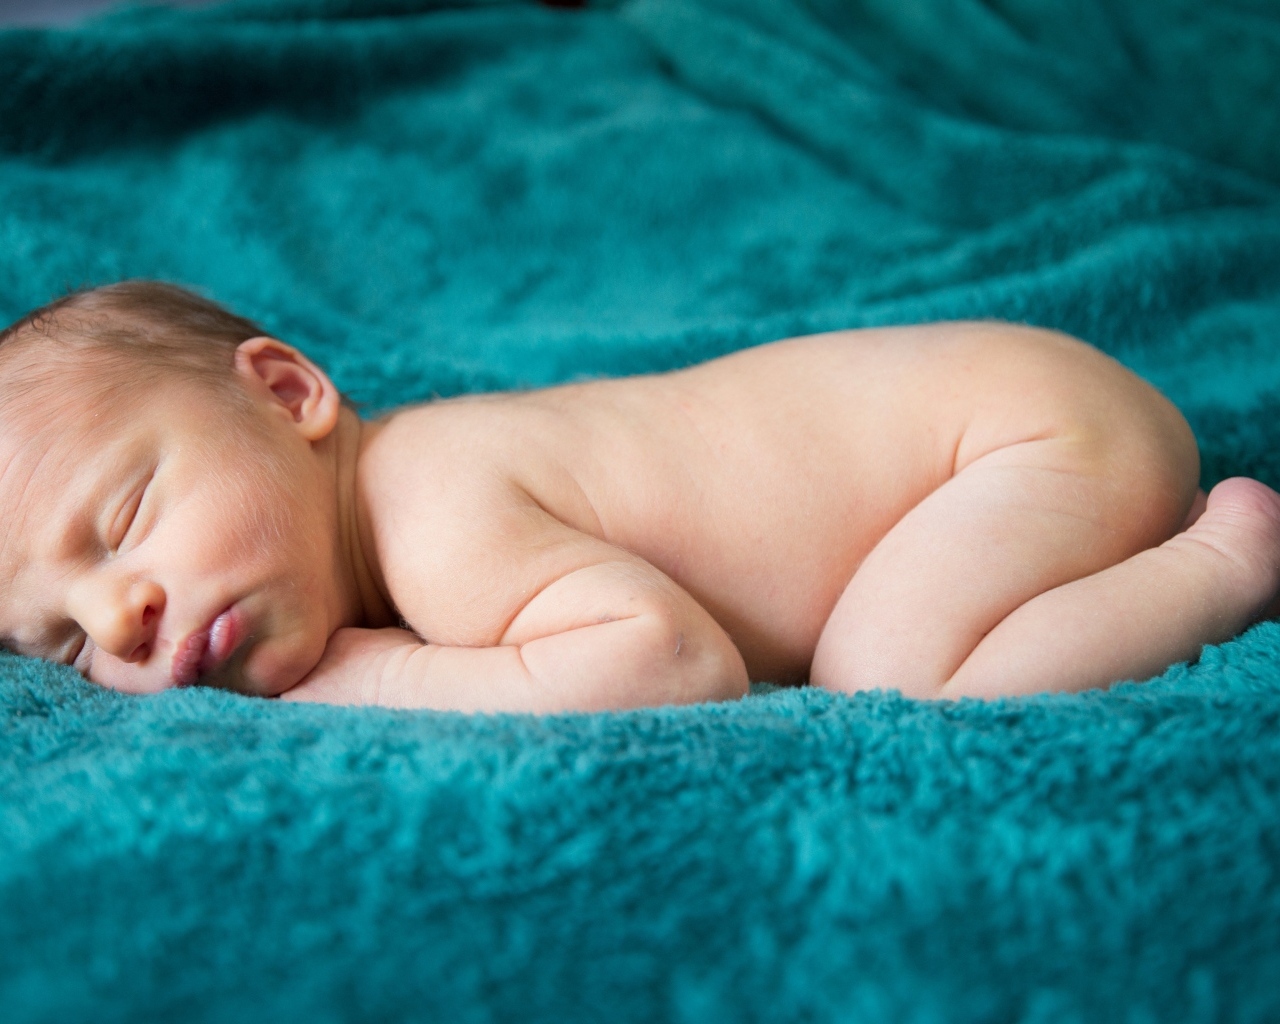 Грудной ребенок спит на синем пледе